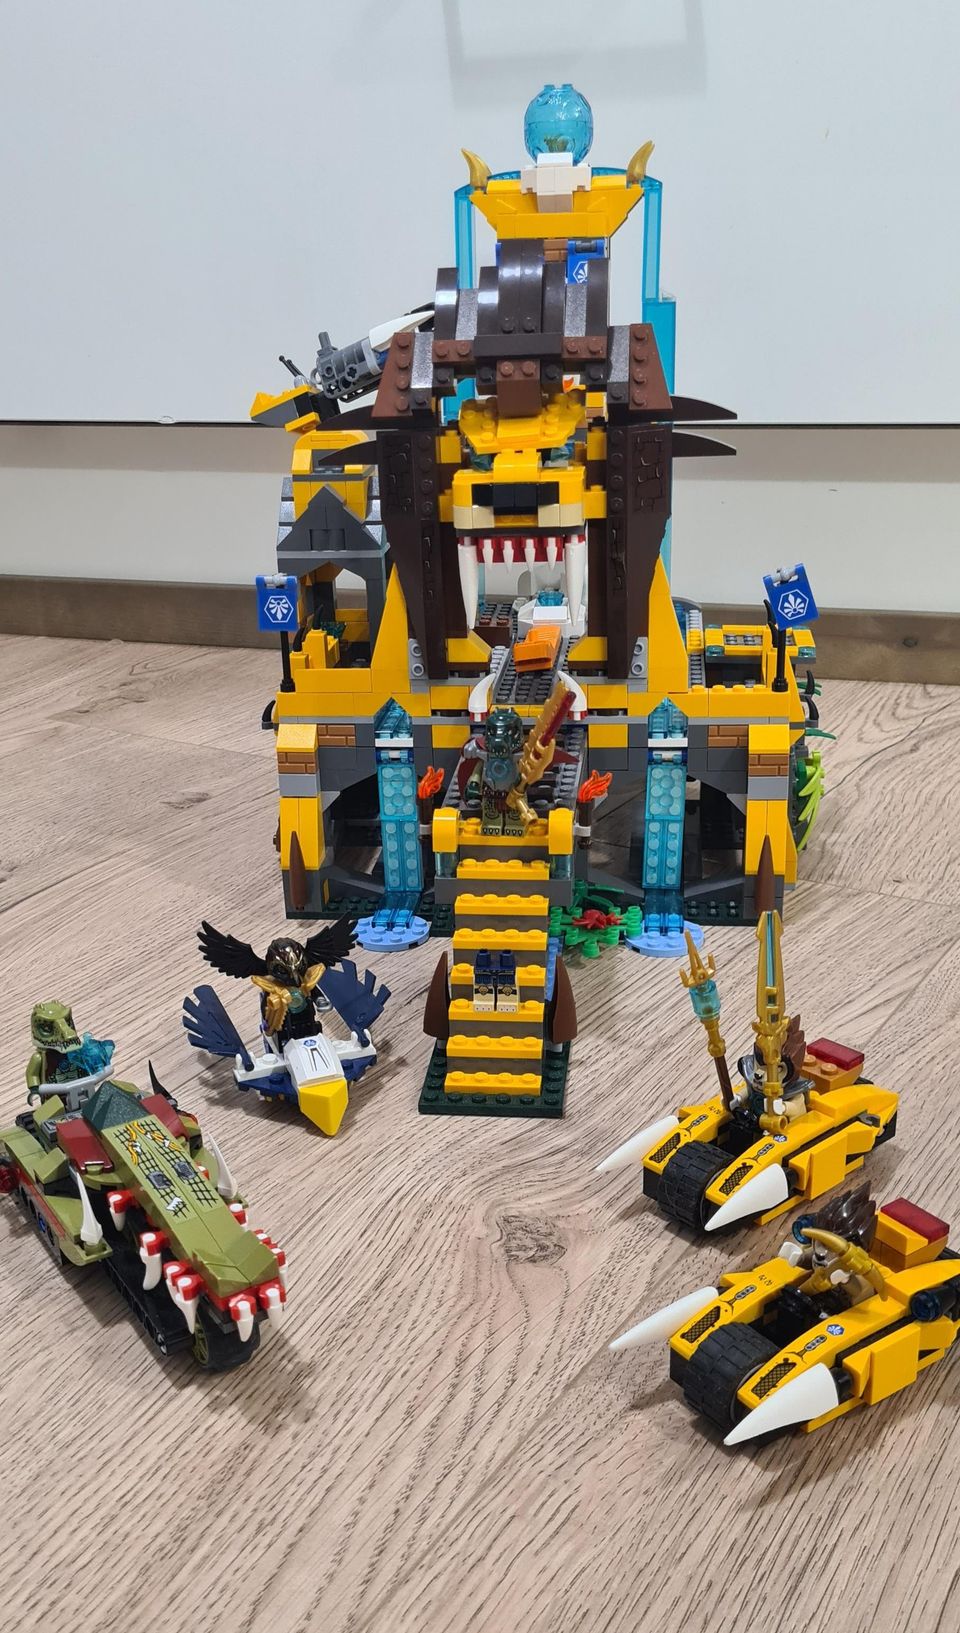 Lego chima 70010 leijona temppeli